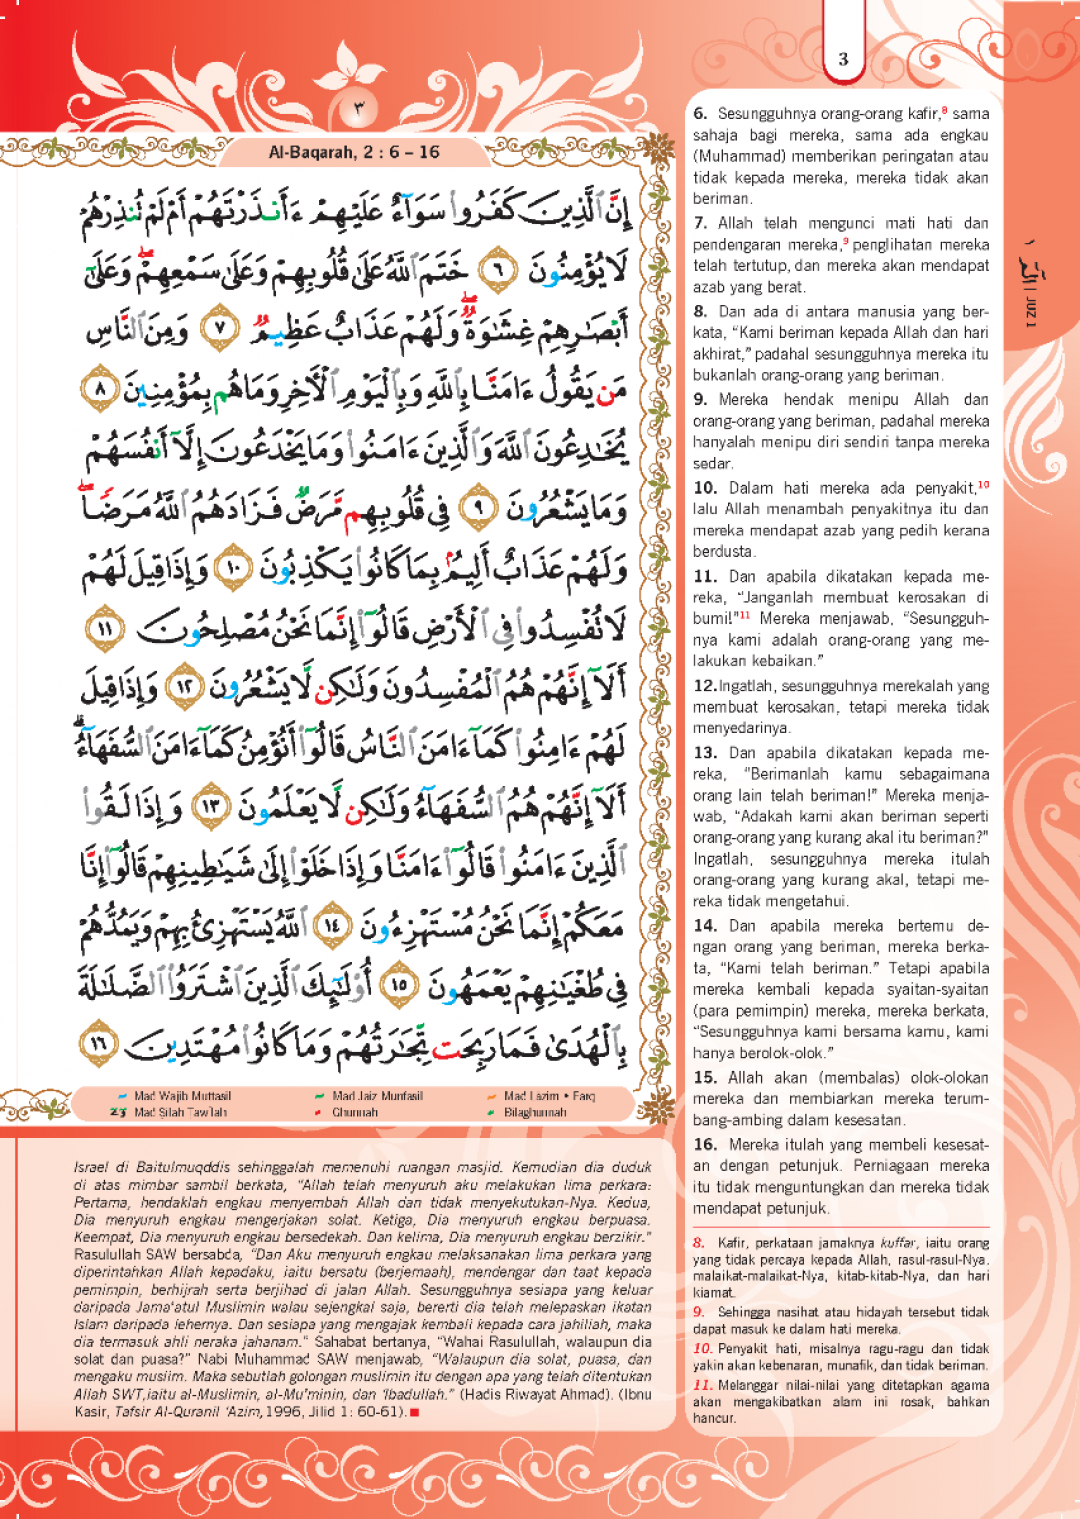 Al-Quran Al-Karim Firdaus B5